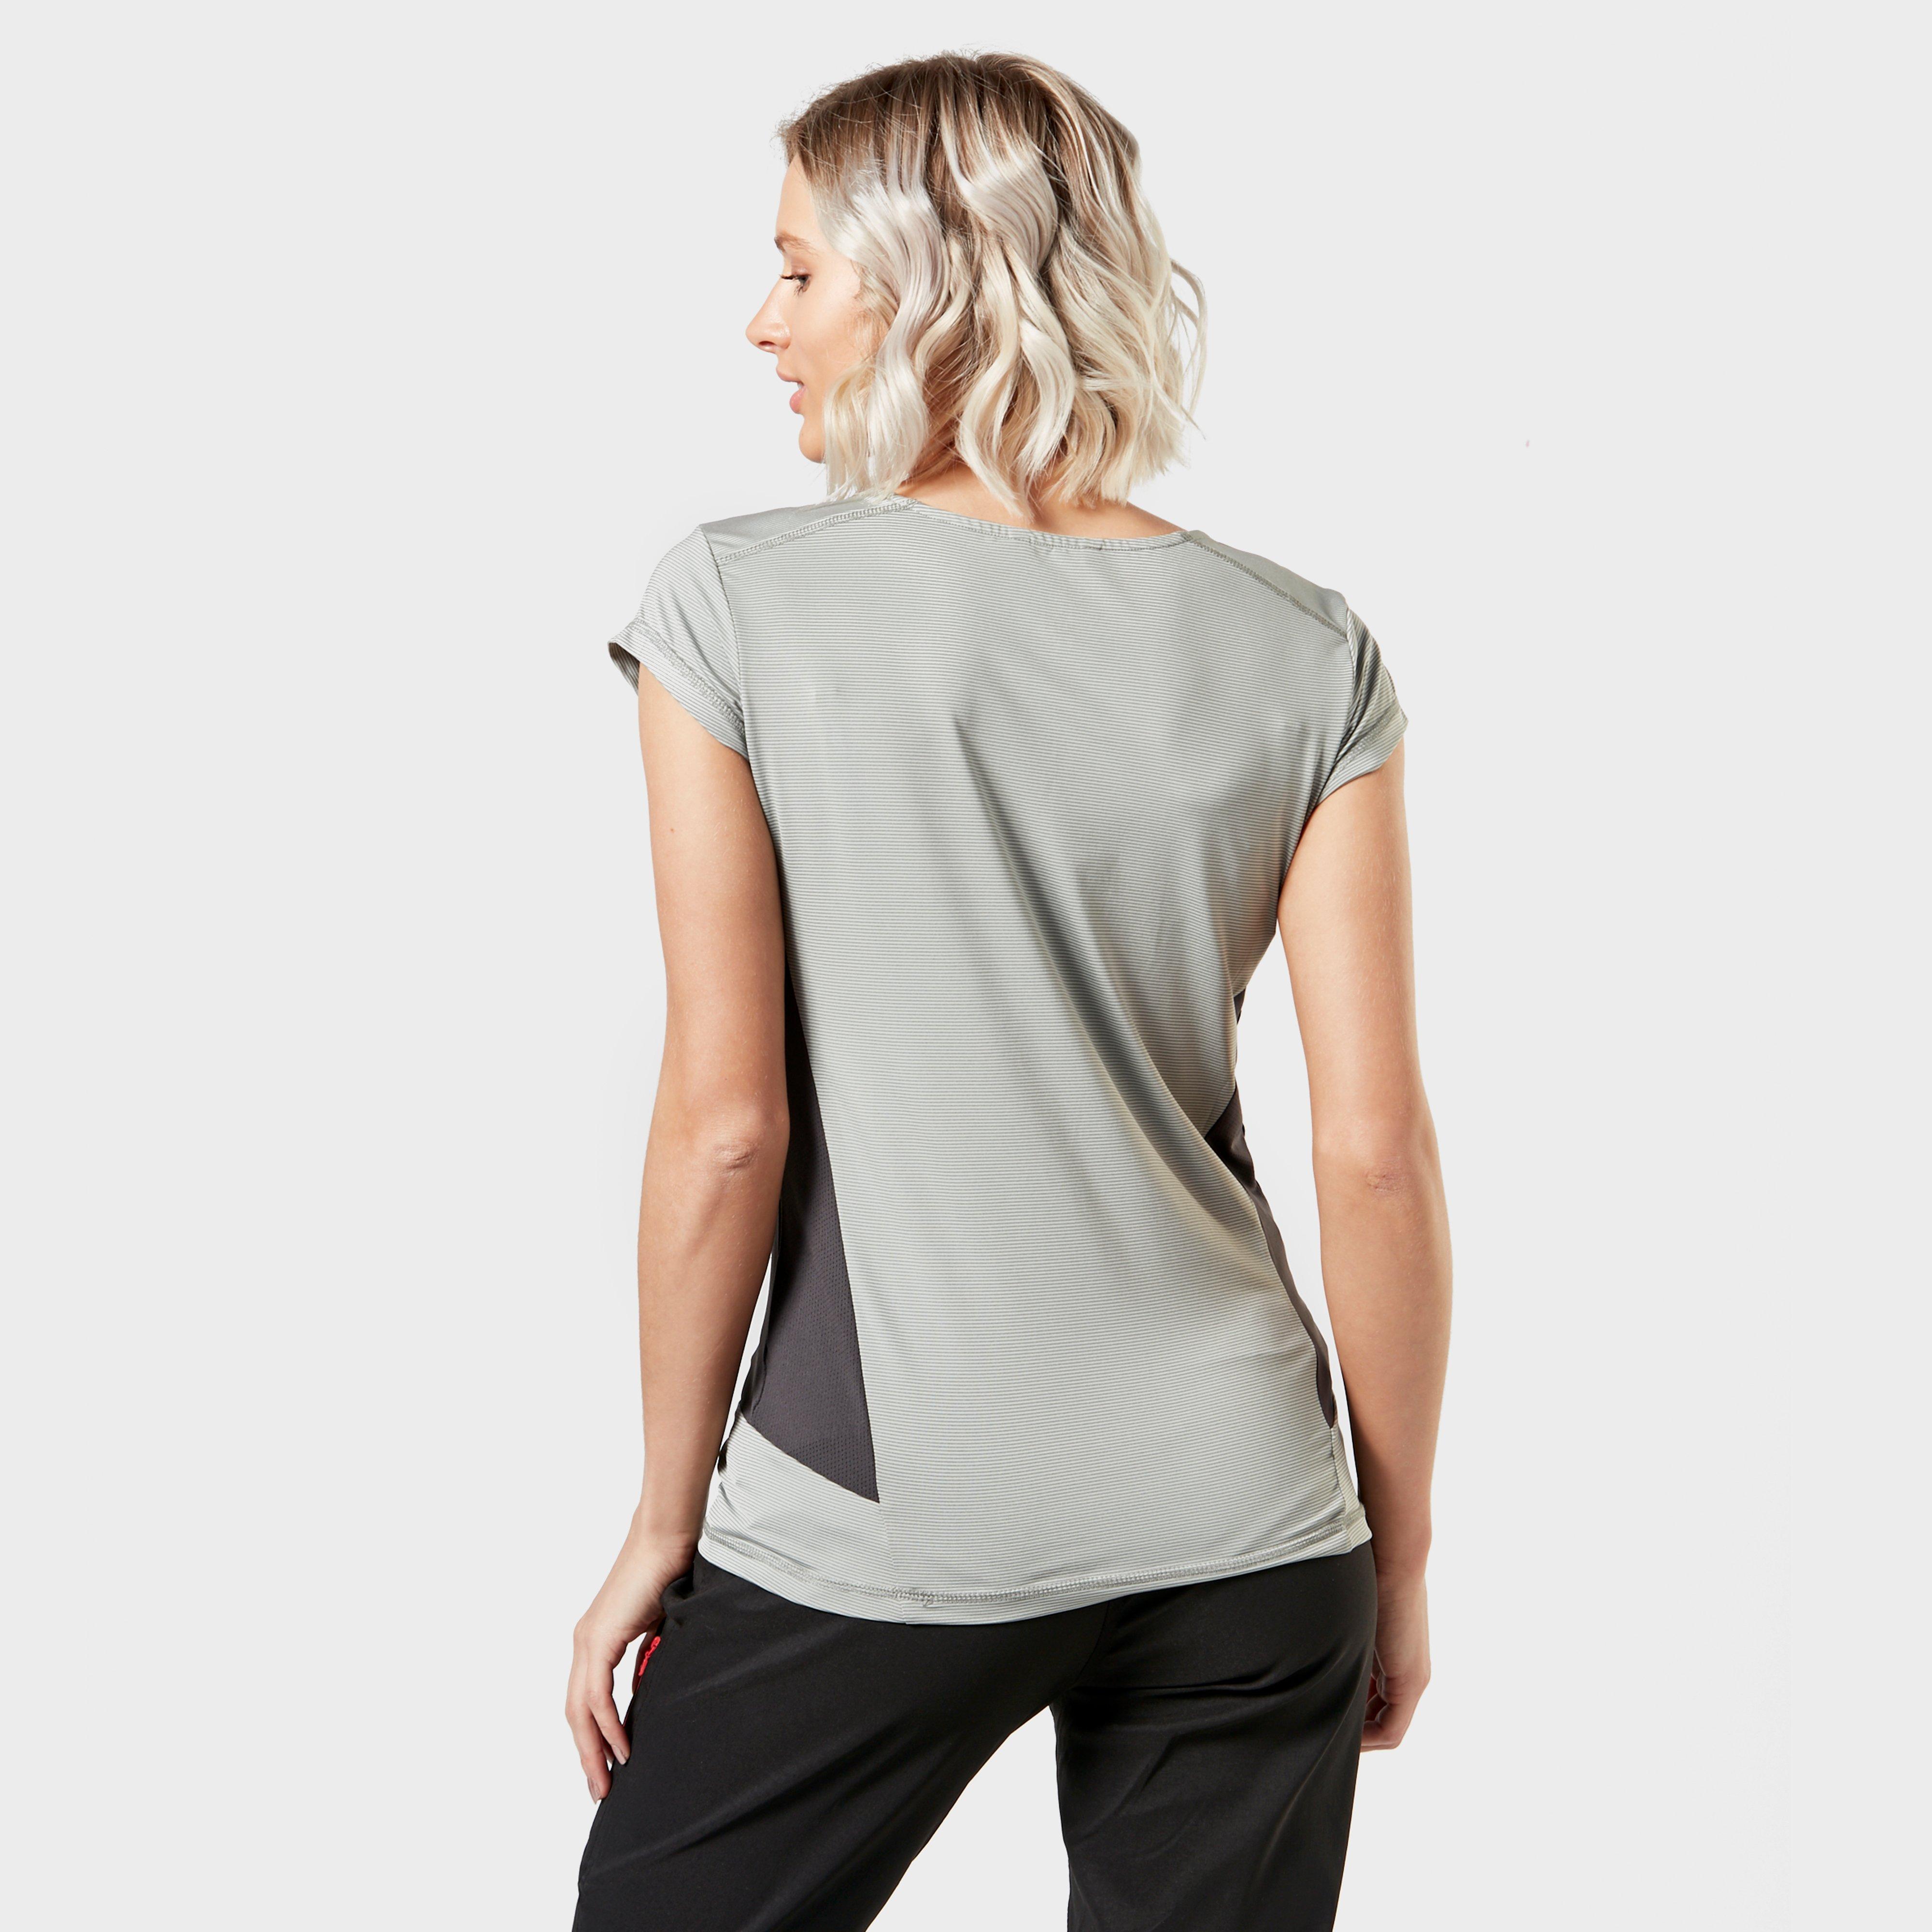 Craghoppers Women's Atmos Short Sleeved T-Shirt Review